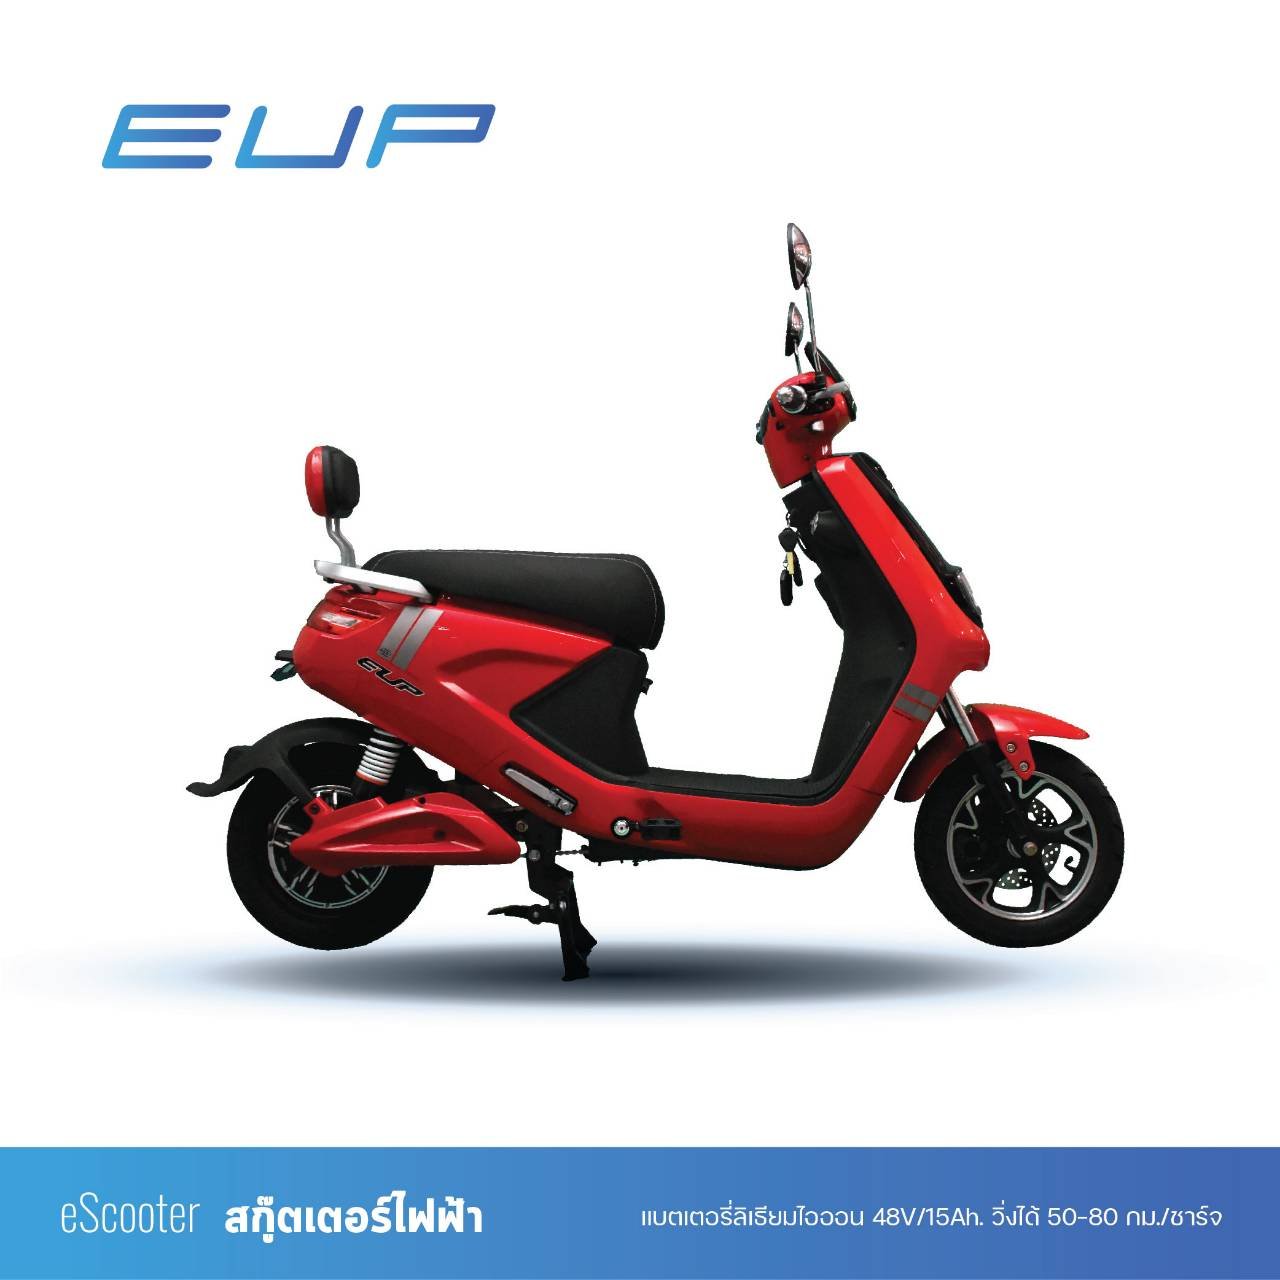 Escooter electric motorbike Samui Thailand